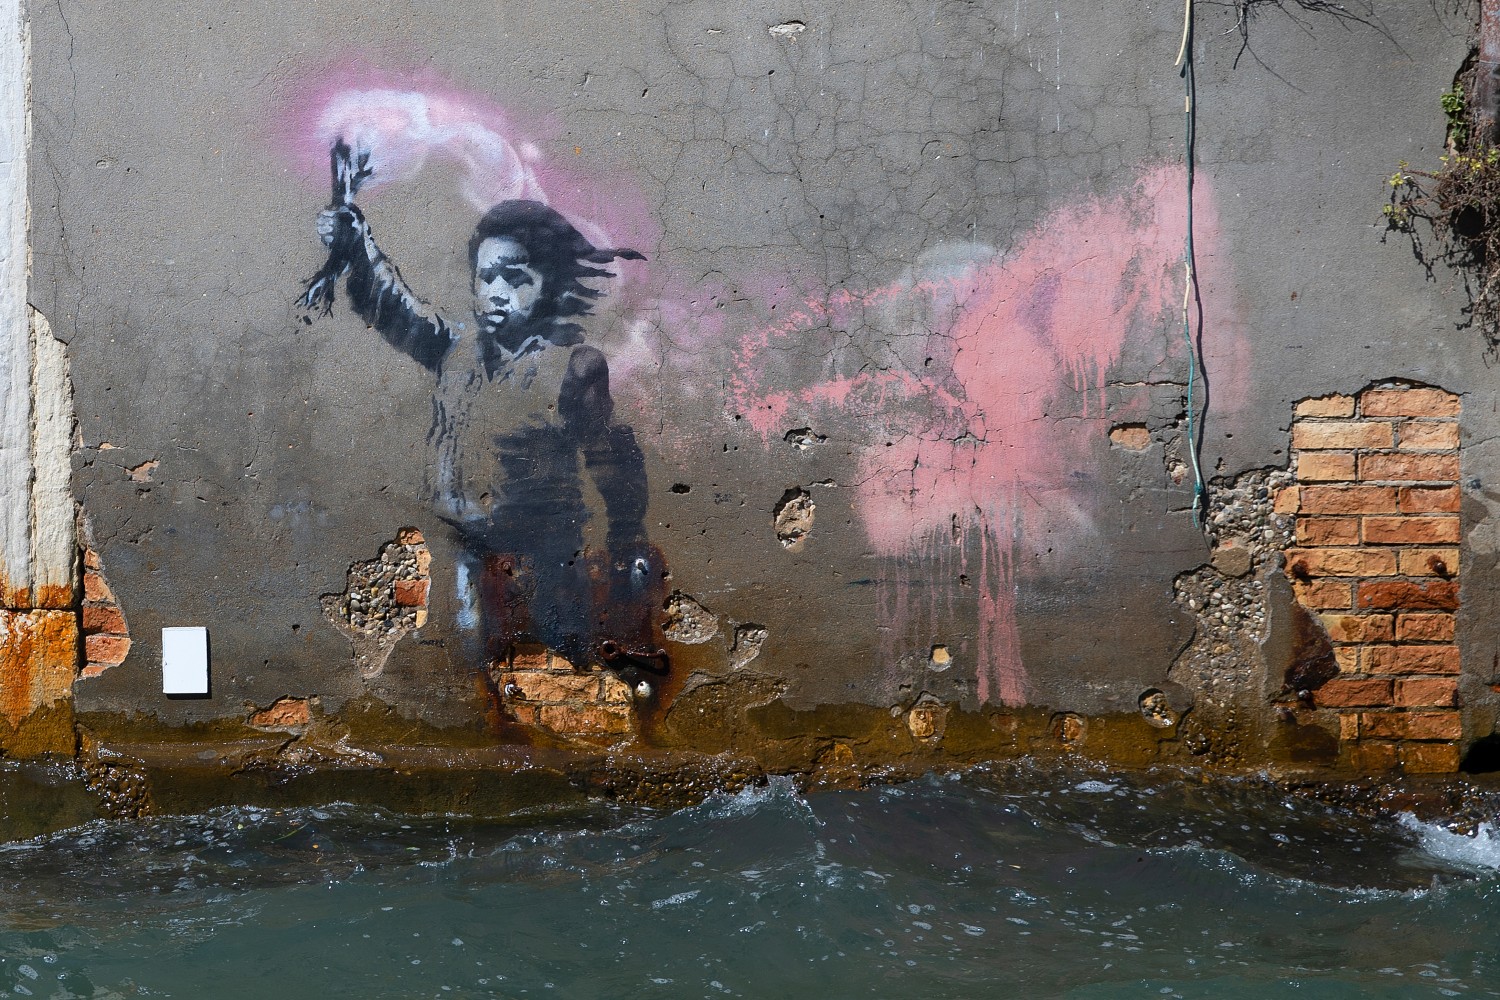 How Do You Restore a Banksy Mural? Venice Is Working on It. - InsideHook